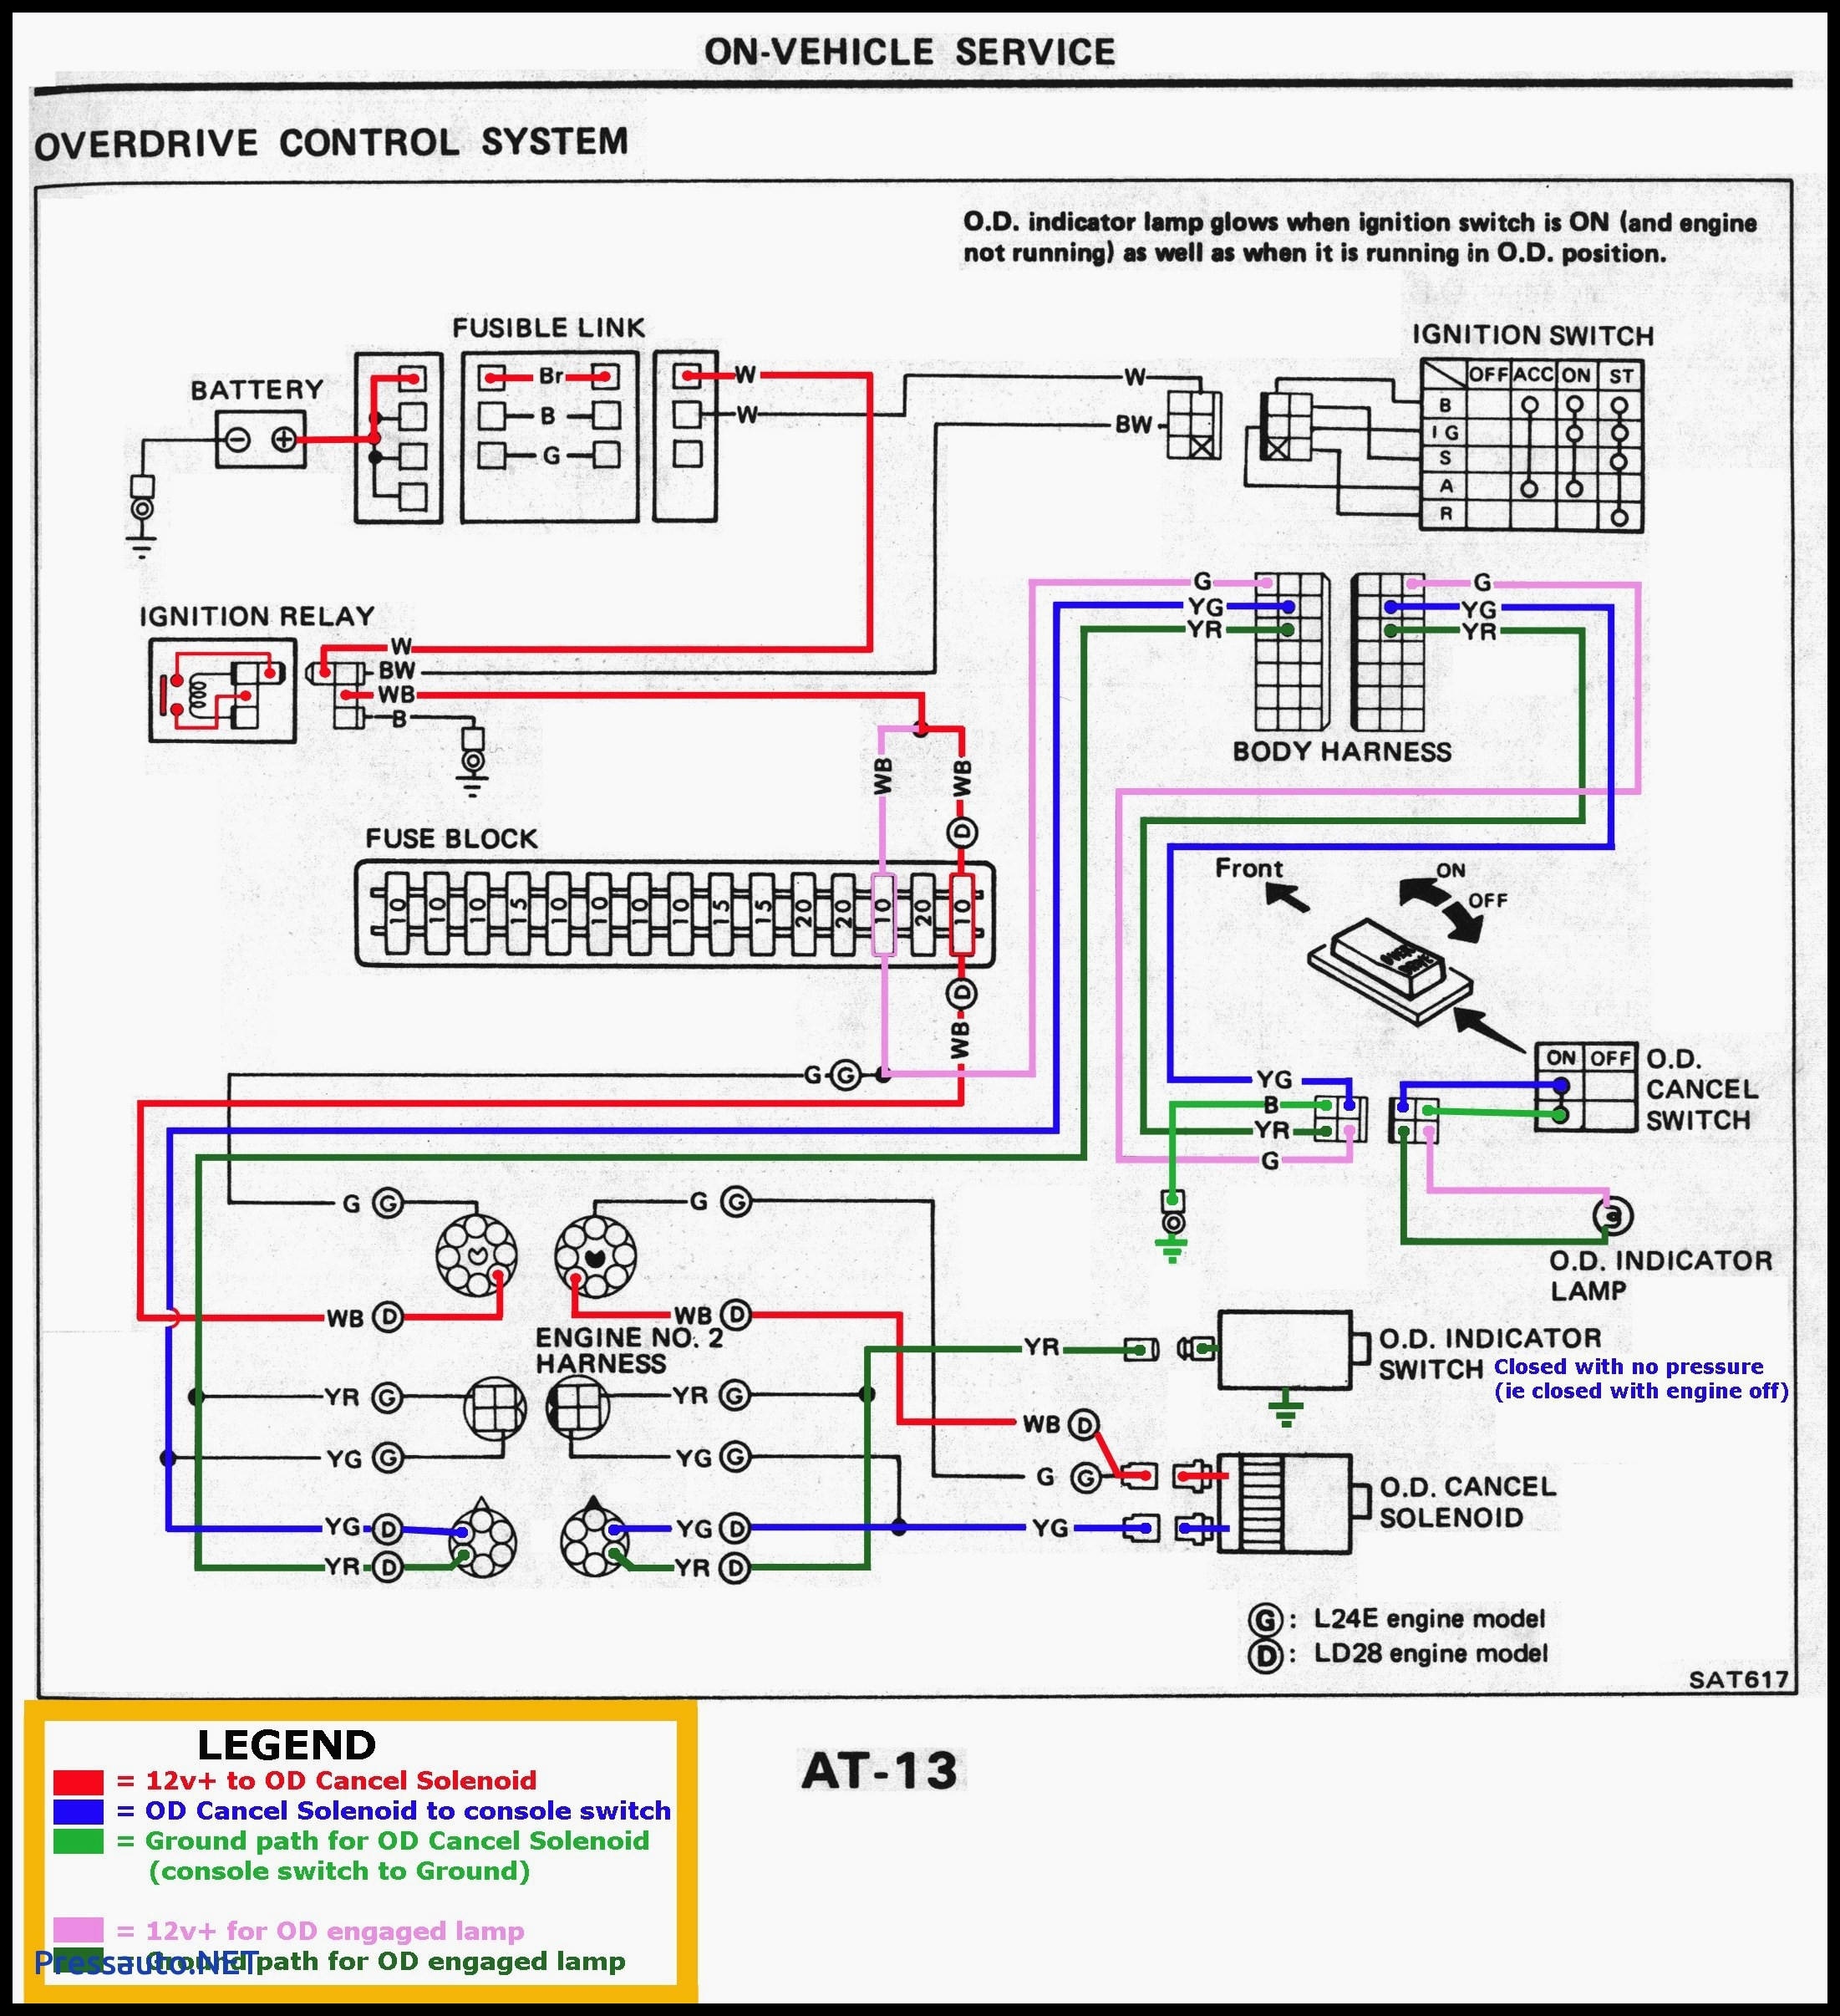 Toyota Corolla Undercarriage Diagram Unique Wiring Diagrams for toyota Corolla Best toyota Wiring Diagram Color